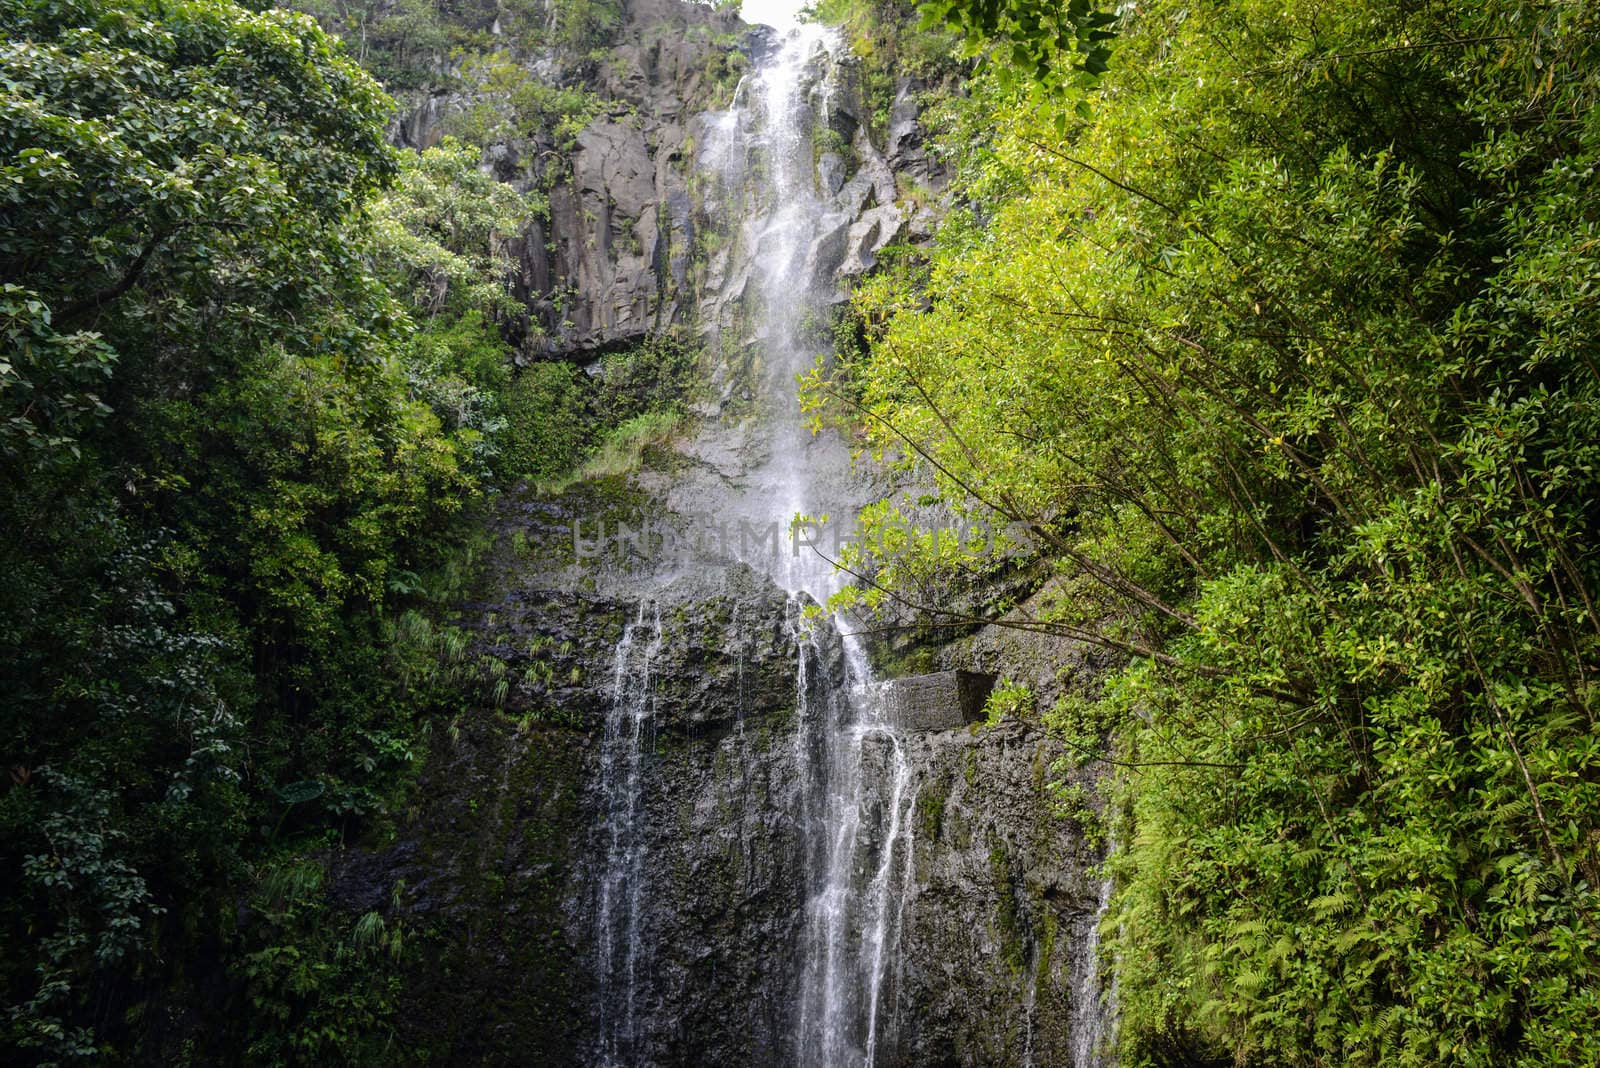 Waterfall in Maui Hawaii along the road to Hana